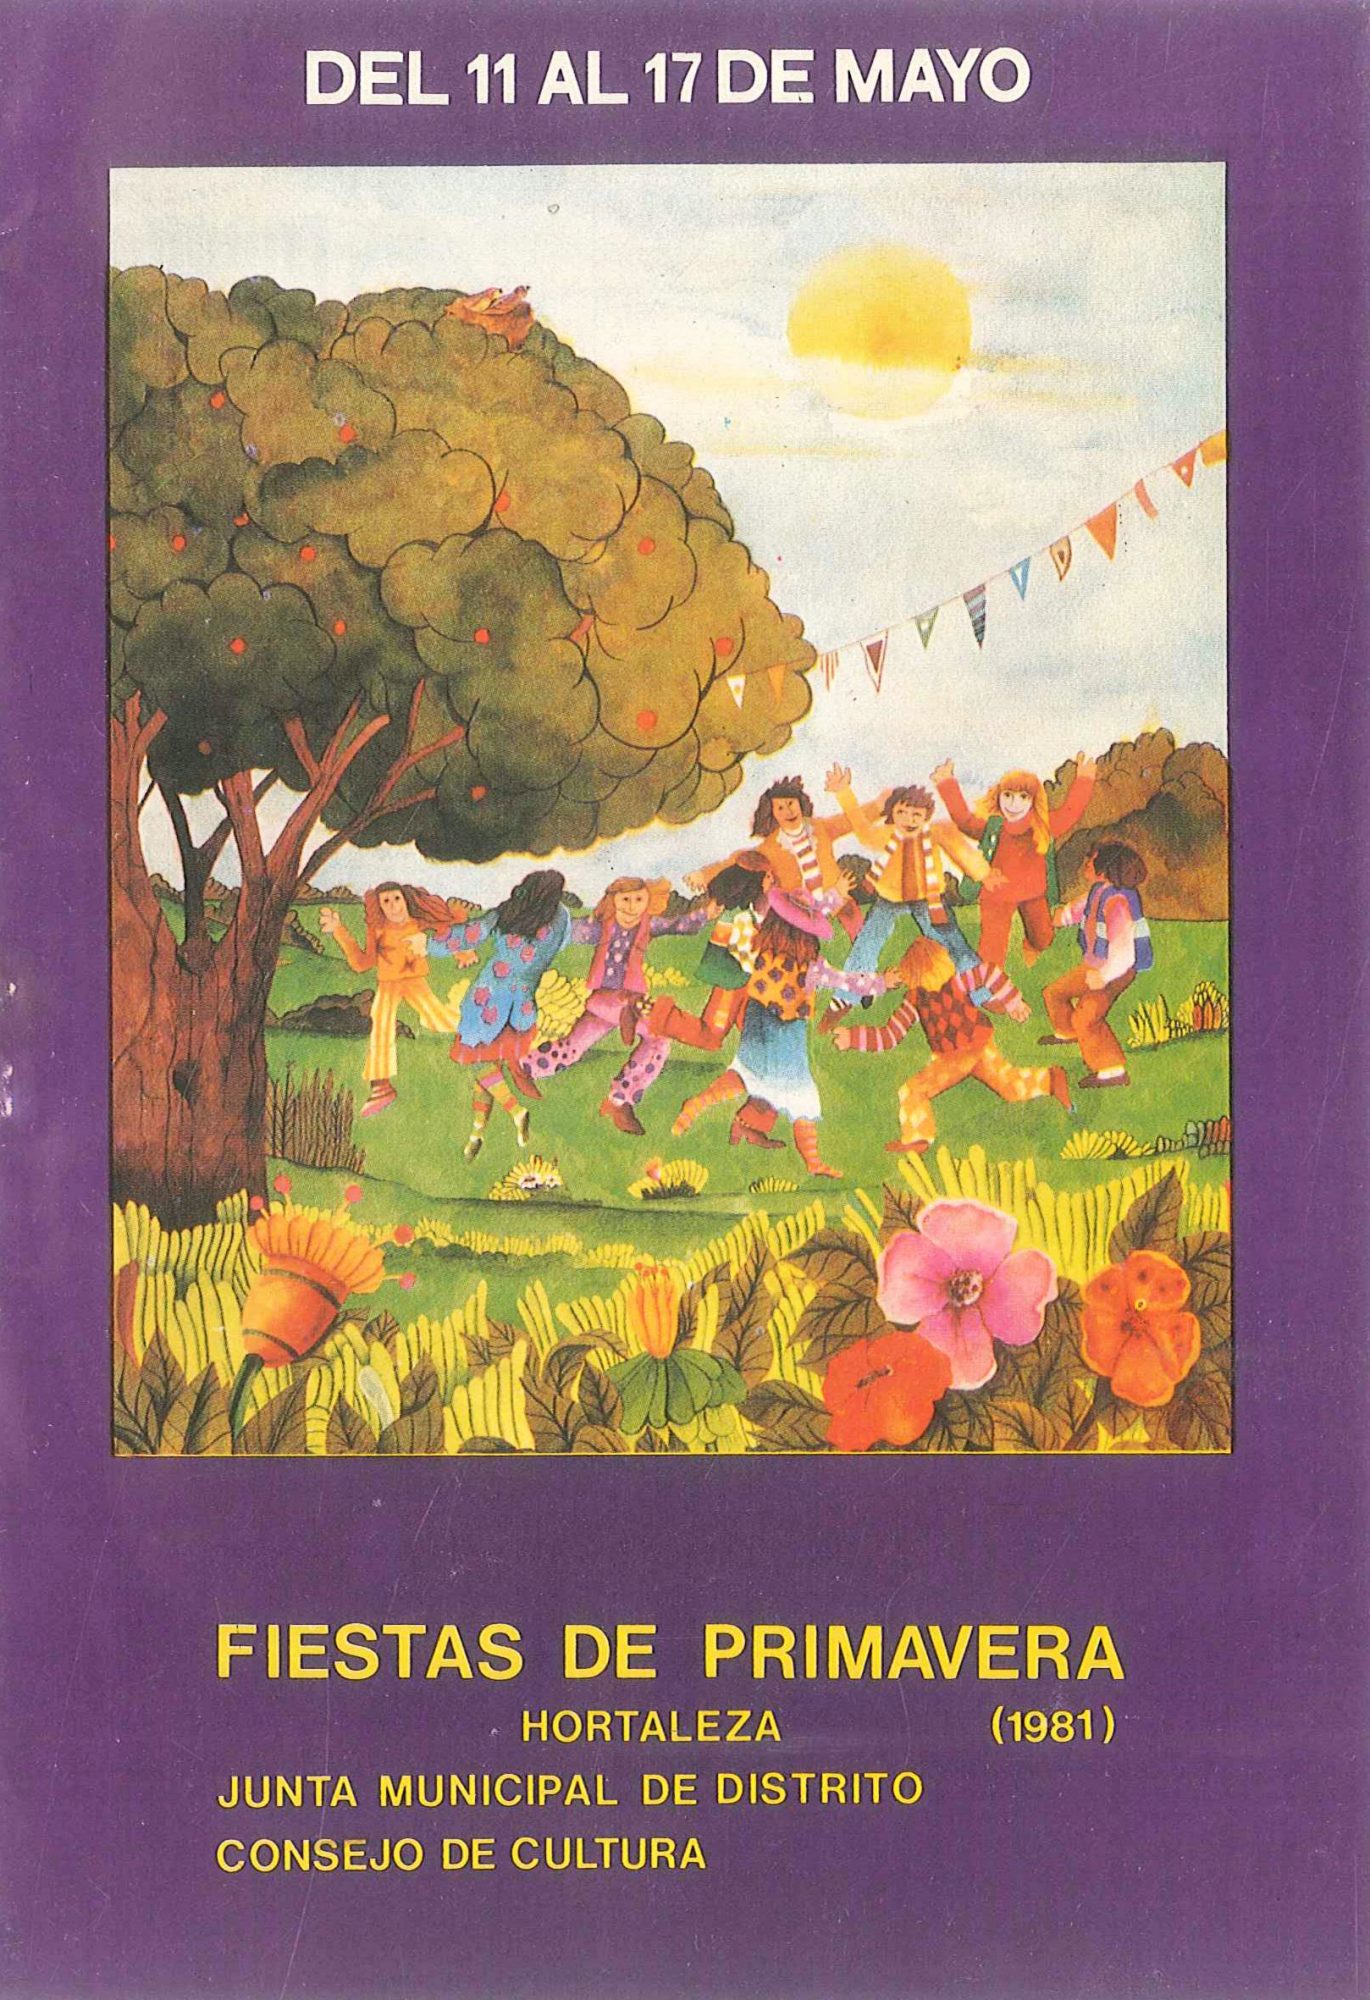 Fiestas de Primavera Hortaleza 1981 e1576077285352